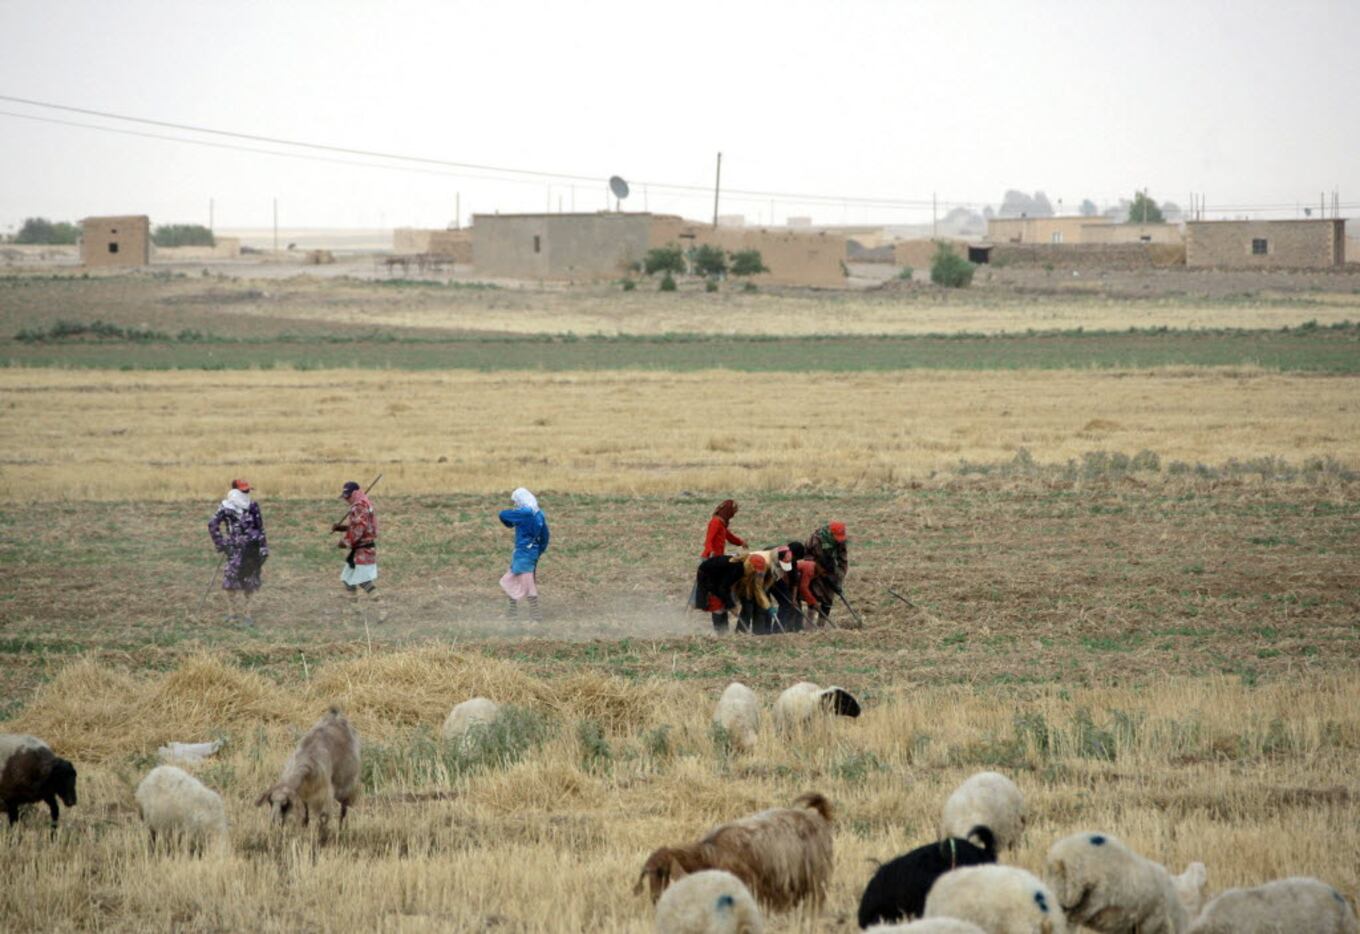 Syrian women till the fields in a drought-hit region northeastern Syria, in 2011.  